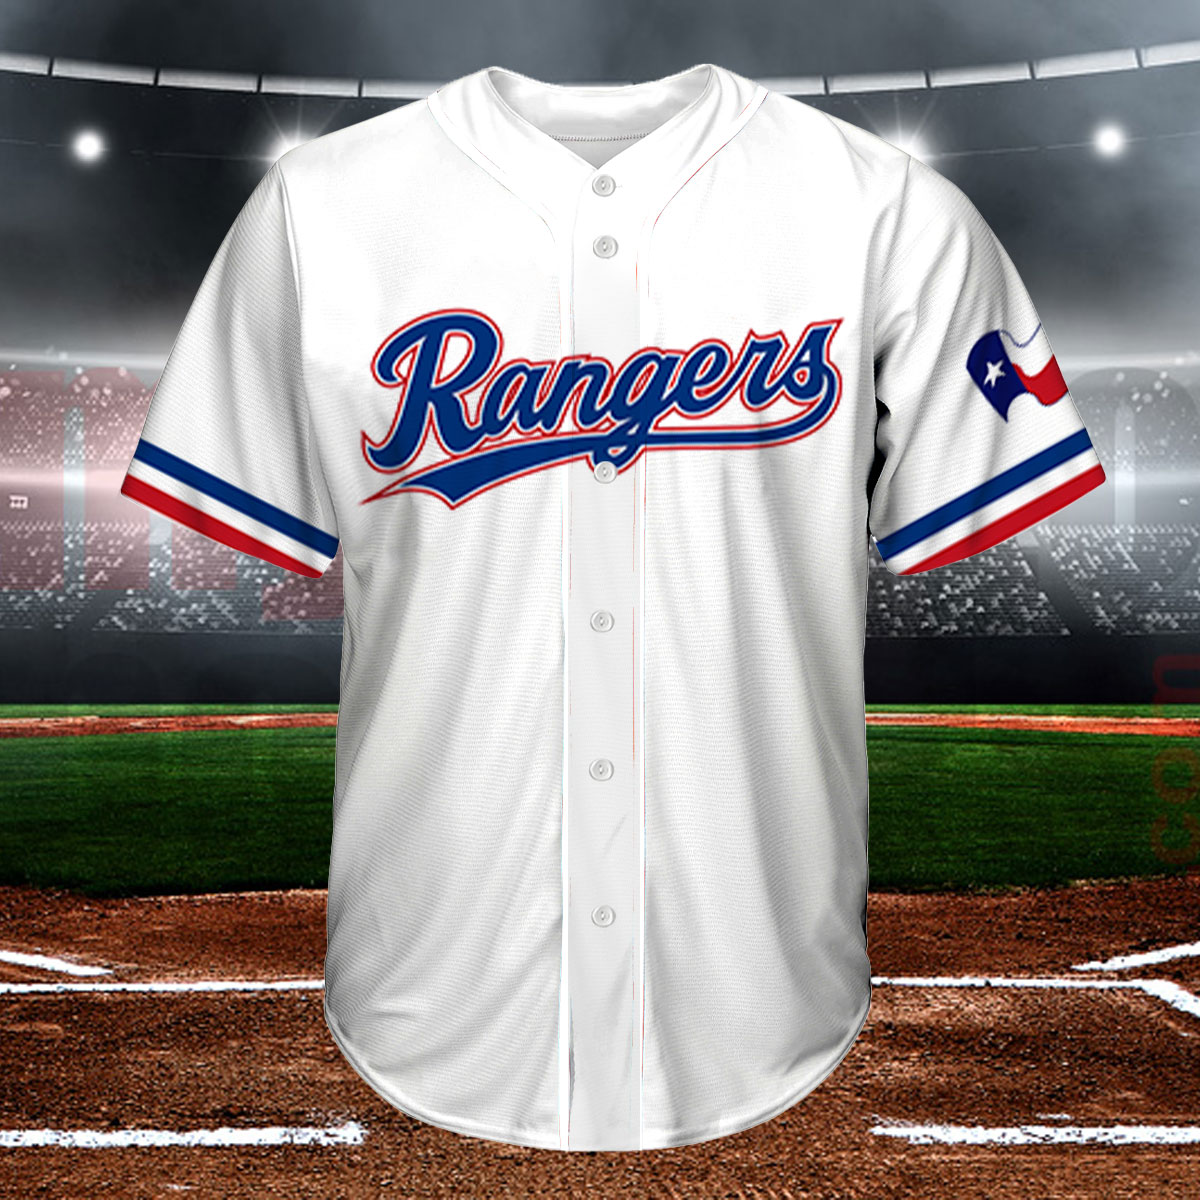 texas rangers uniforms 2023